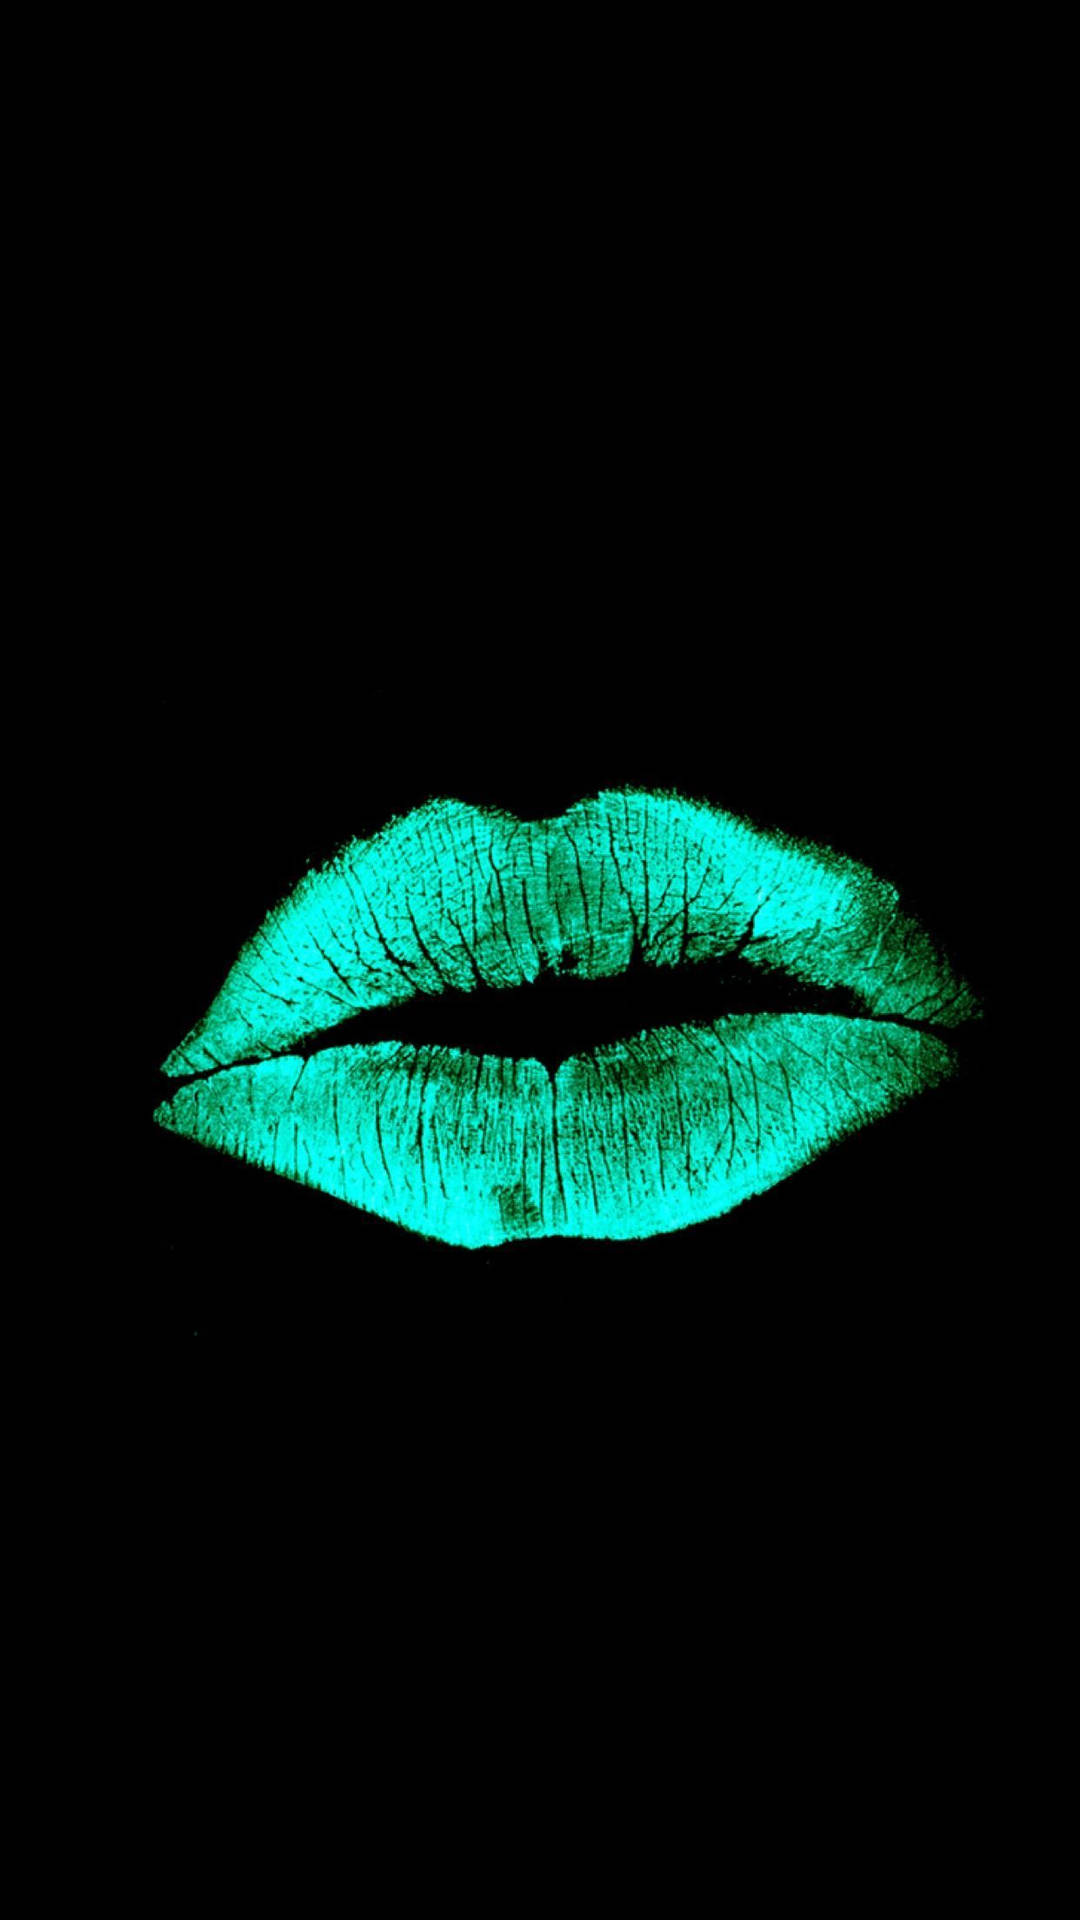 Matted Green Kiss Mark Of Lips Wallpaper